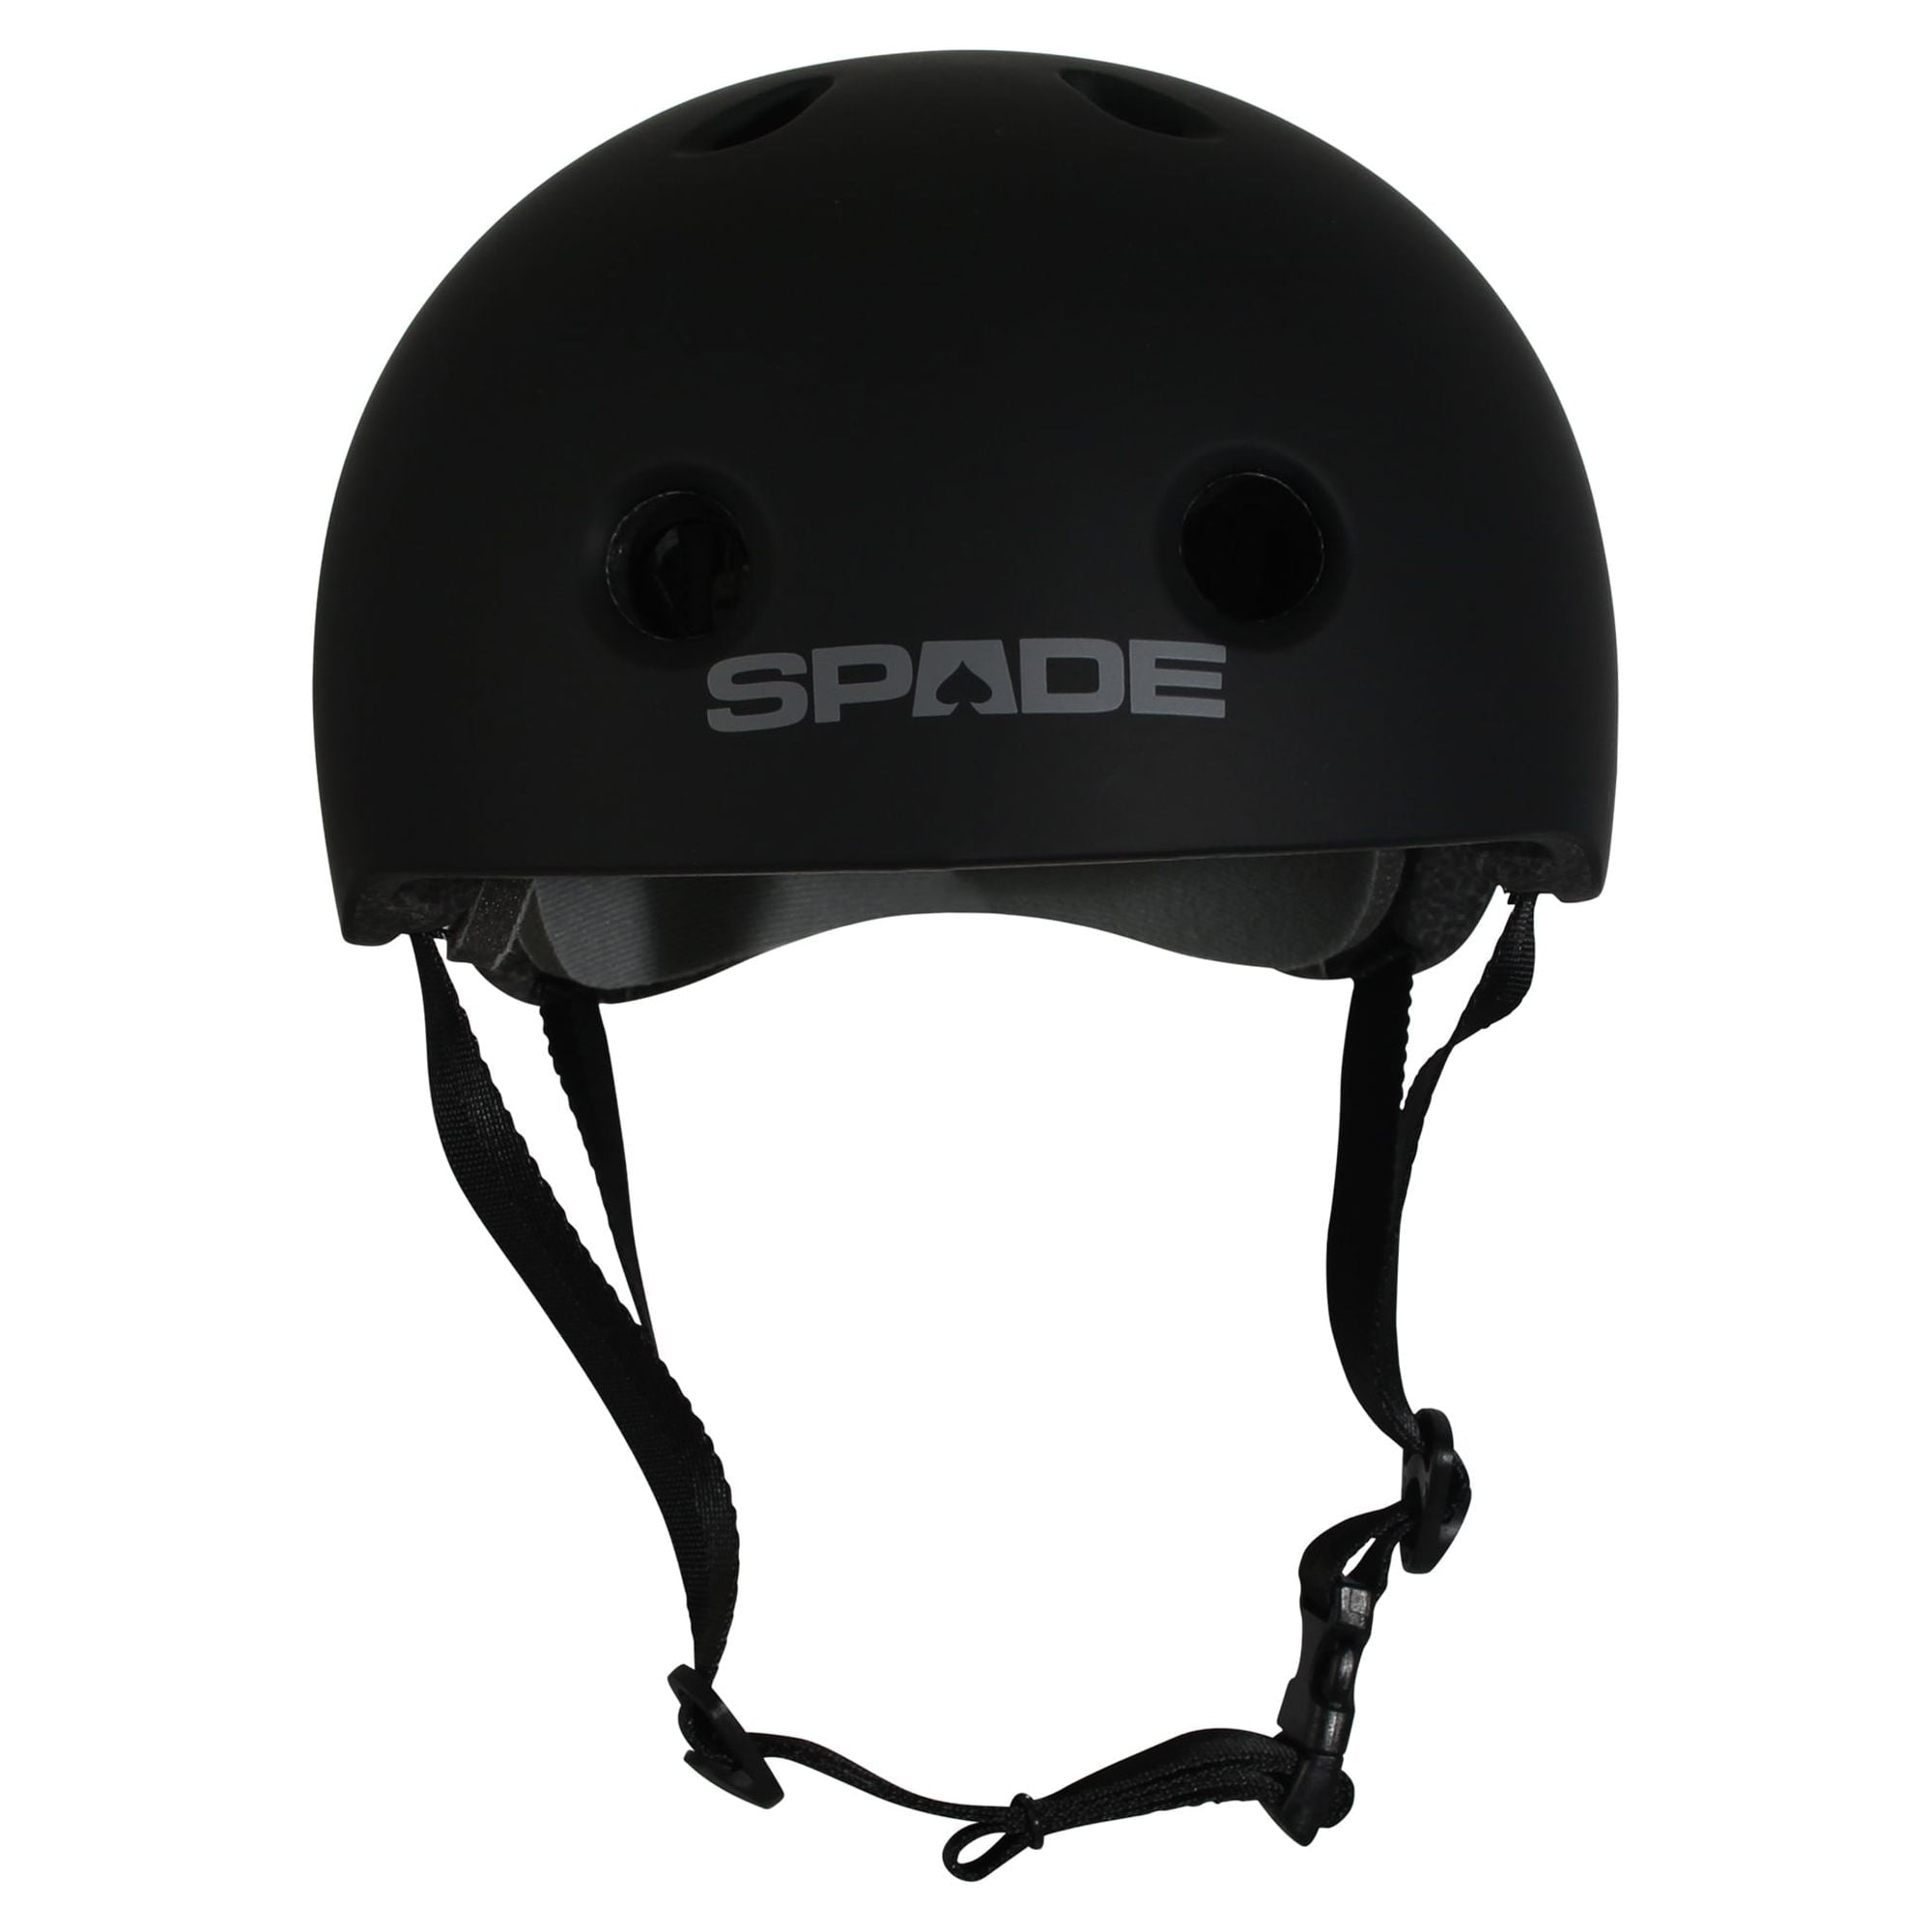 Pro-Tec Spade Series Lightweight Certified Multi-Sport Helmet, Ages 8+